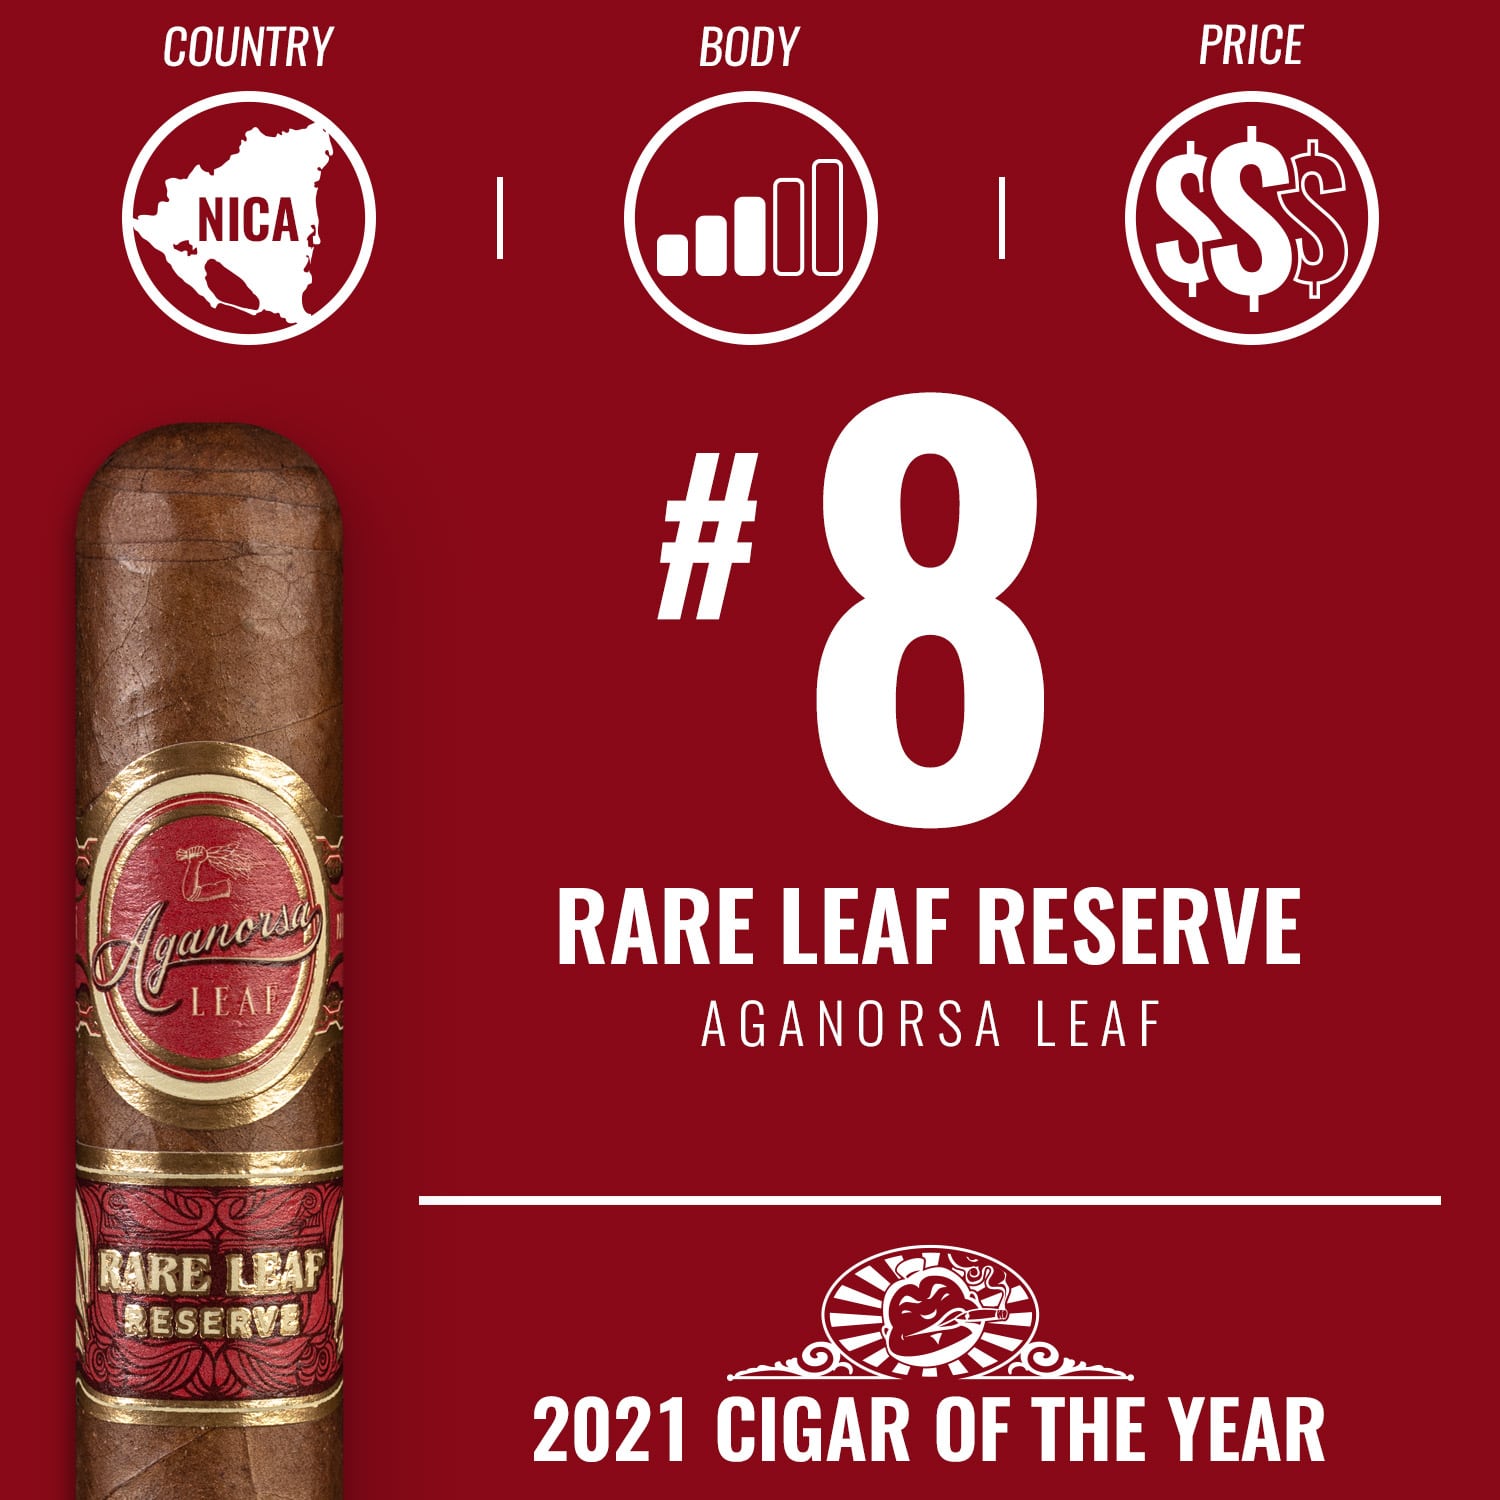 Aganorsa Leaf Rare Leaf Reserve No. 8 Cigar of the Year 2021